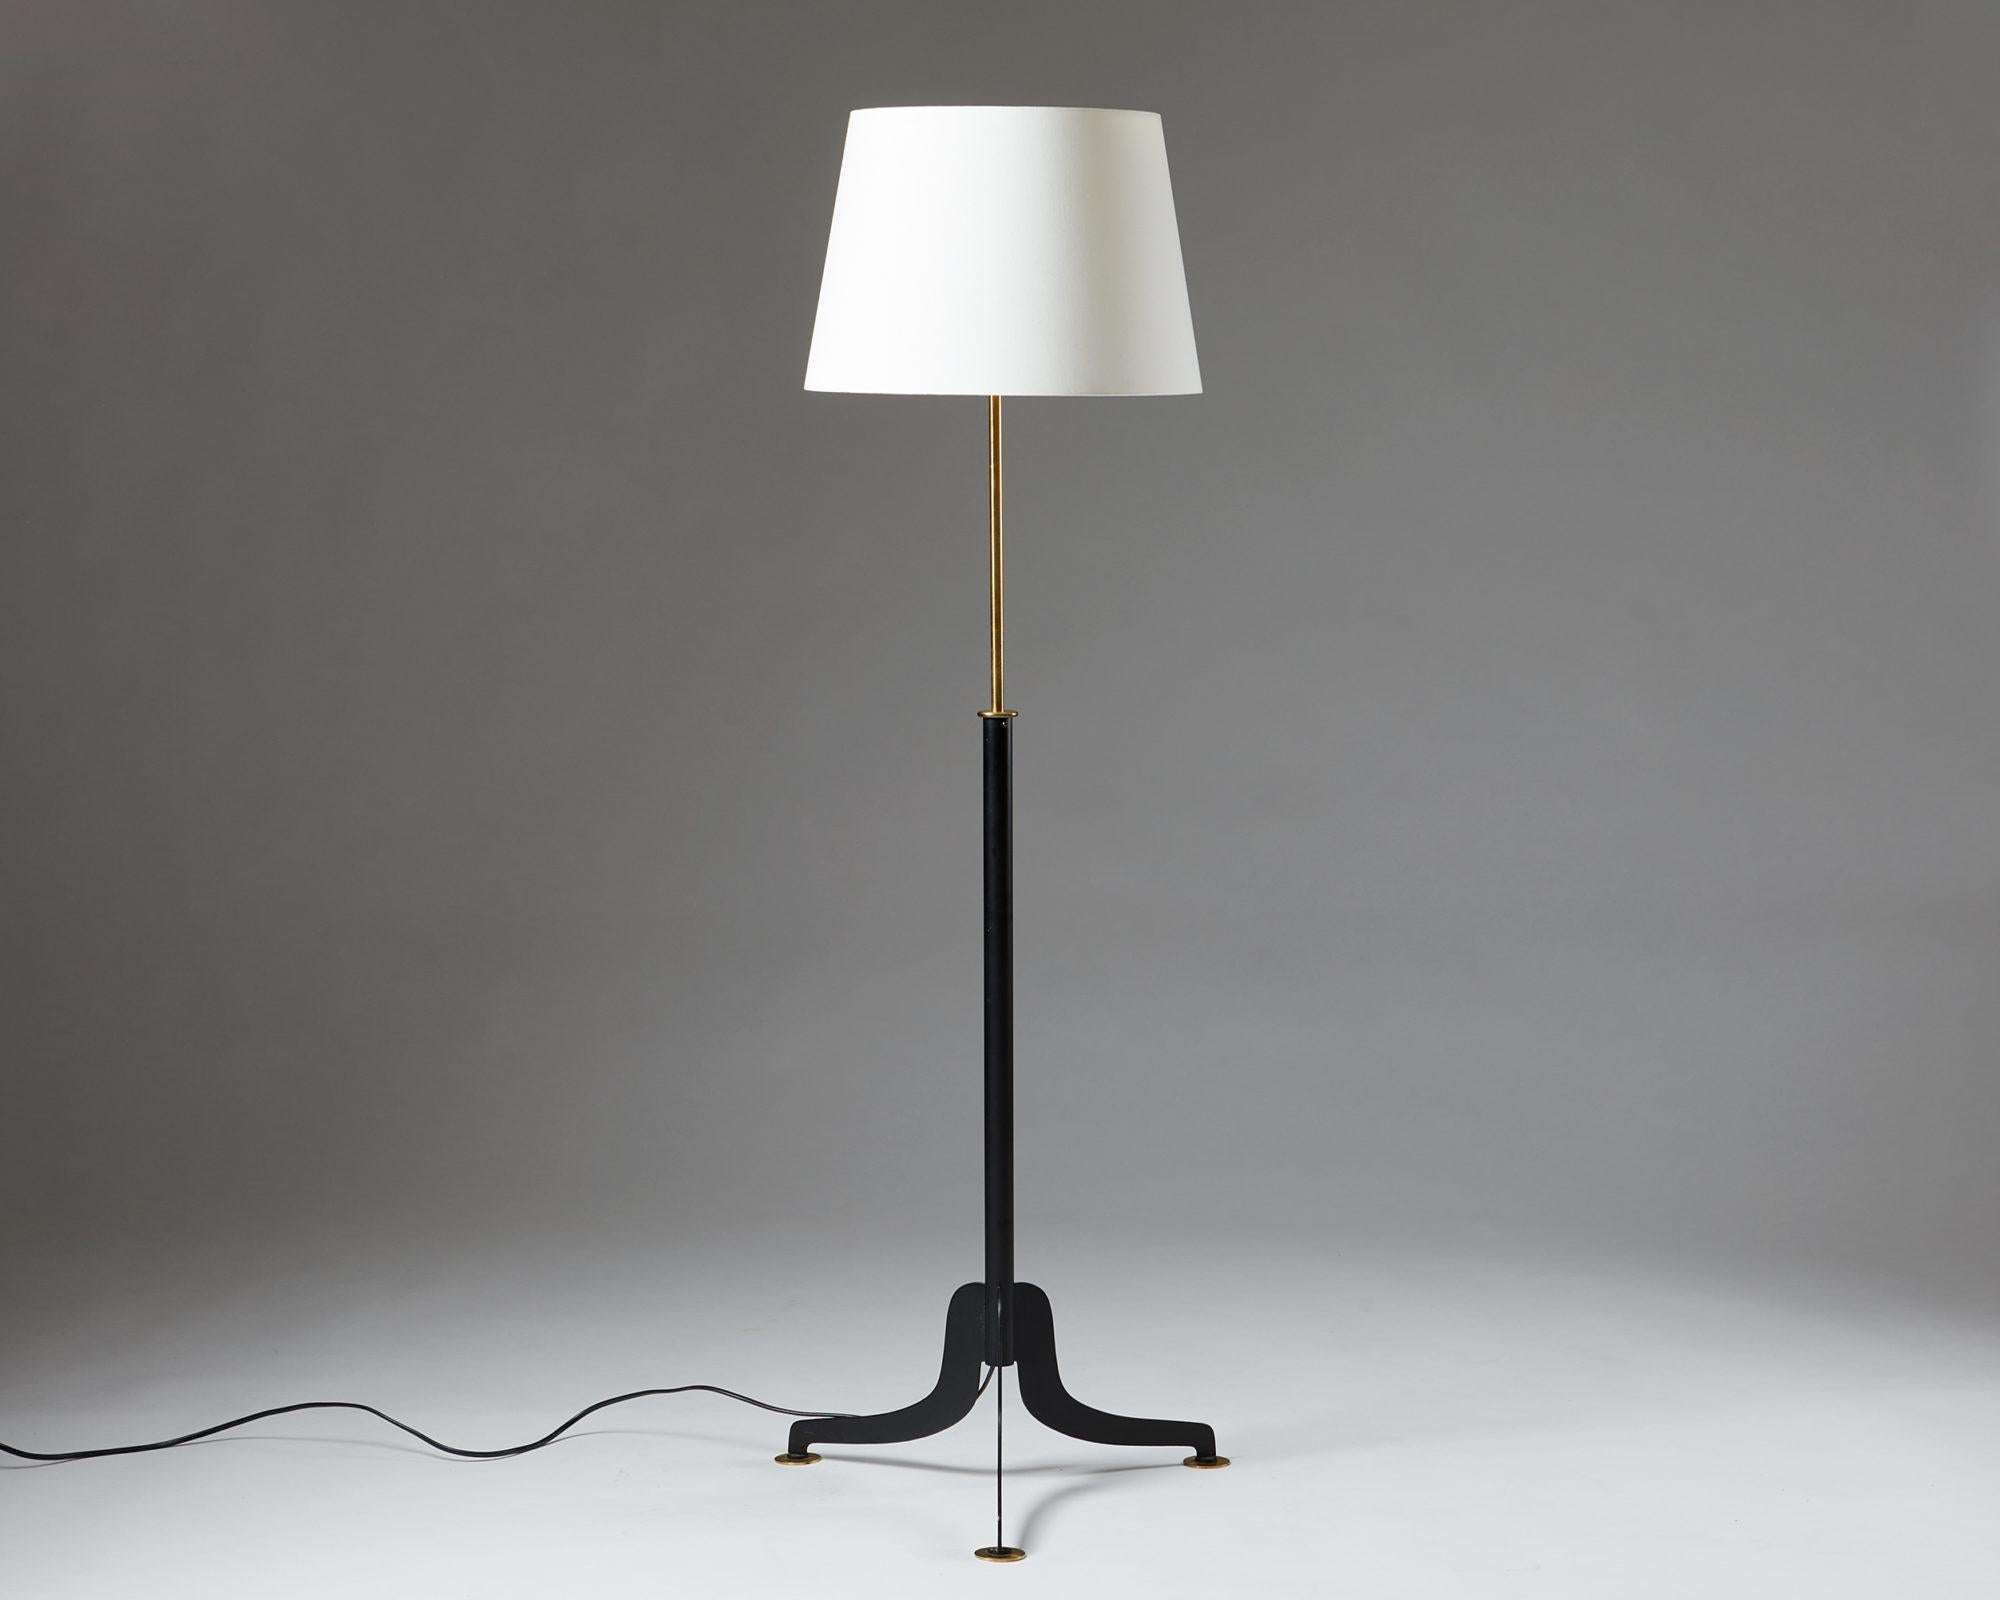 Floor lamp model 2597 designed by Josef Frank for Svenskt Tenn,
Sweden, 1950s.
Black lacquered metal with brass. Fabric shades.

Height is adjustable.

Measures: H 154 cm/ 5' 2/3